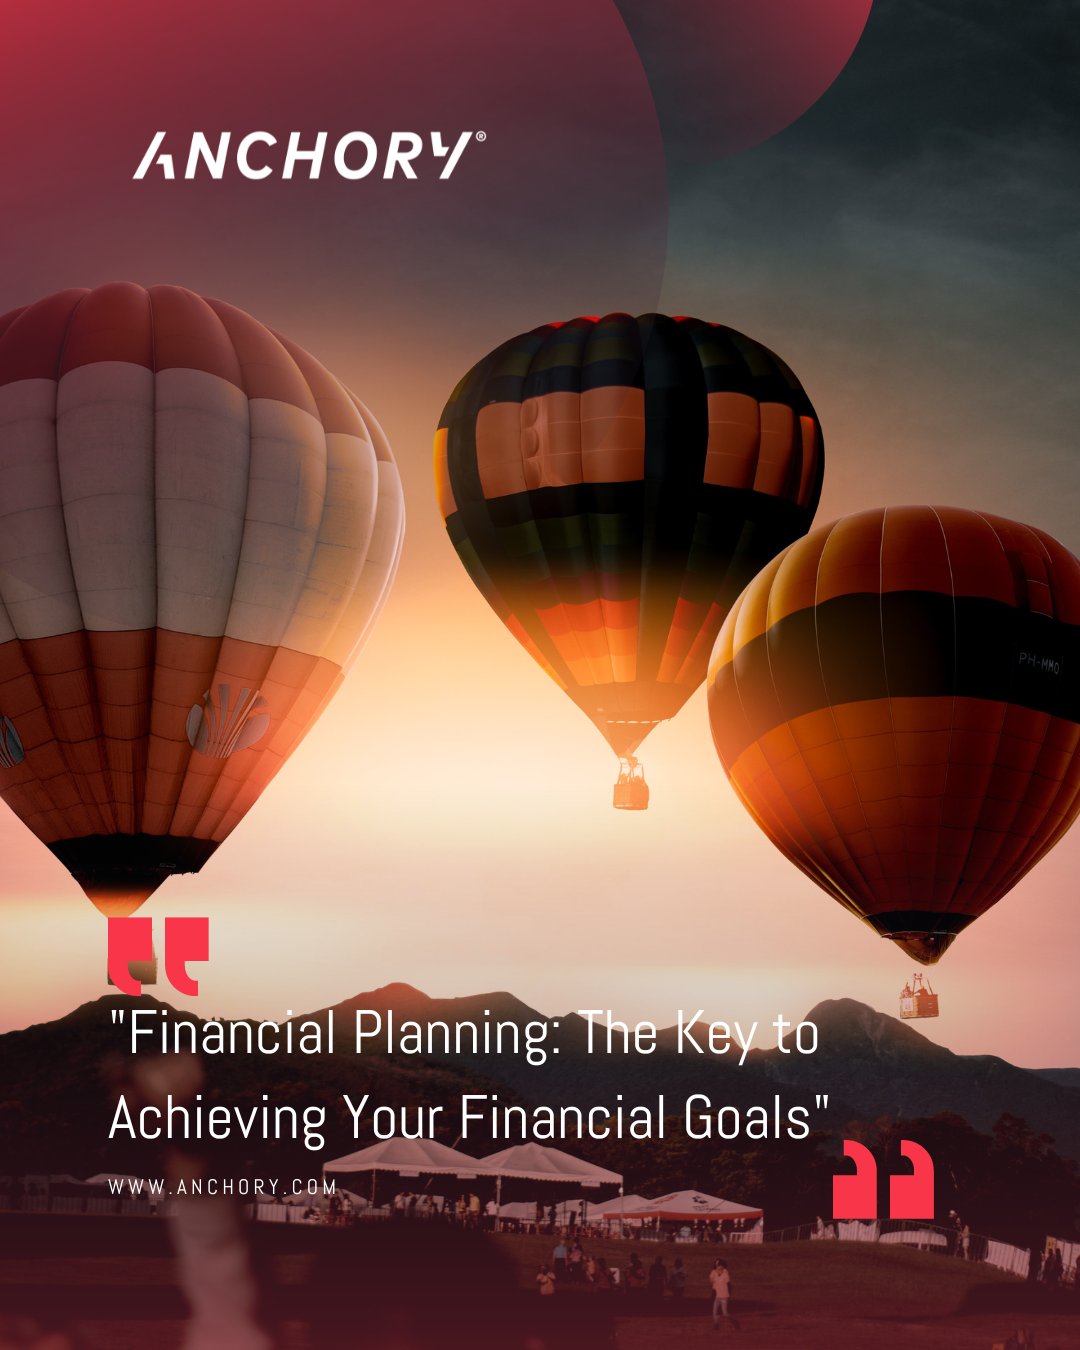  Achieve your financial goals